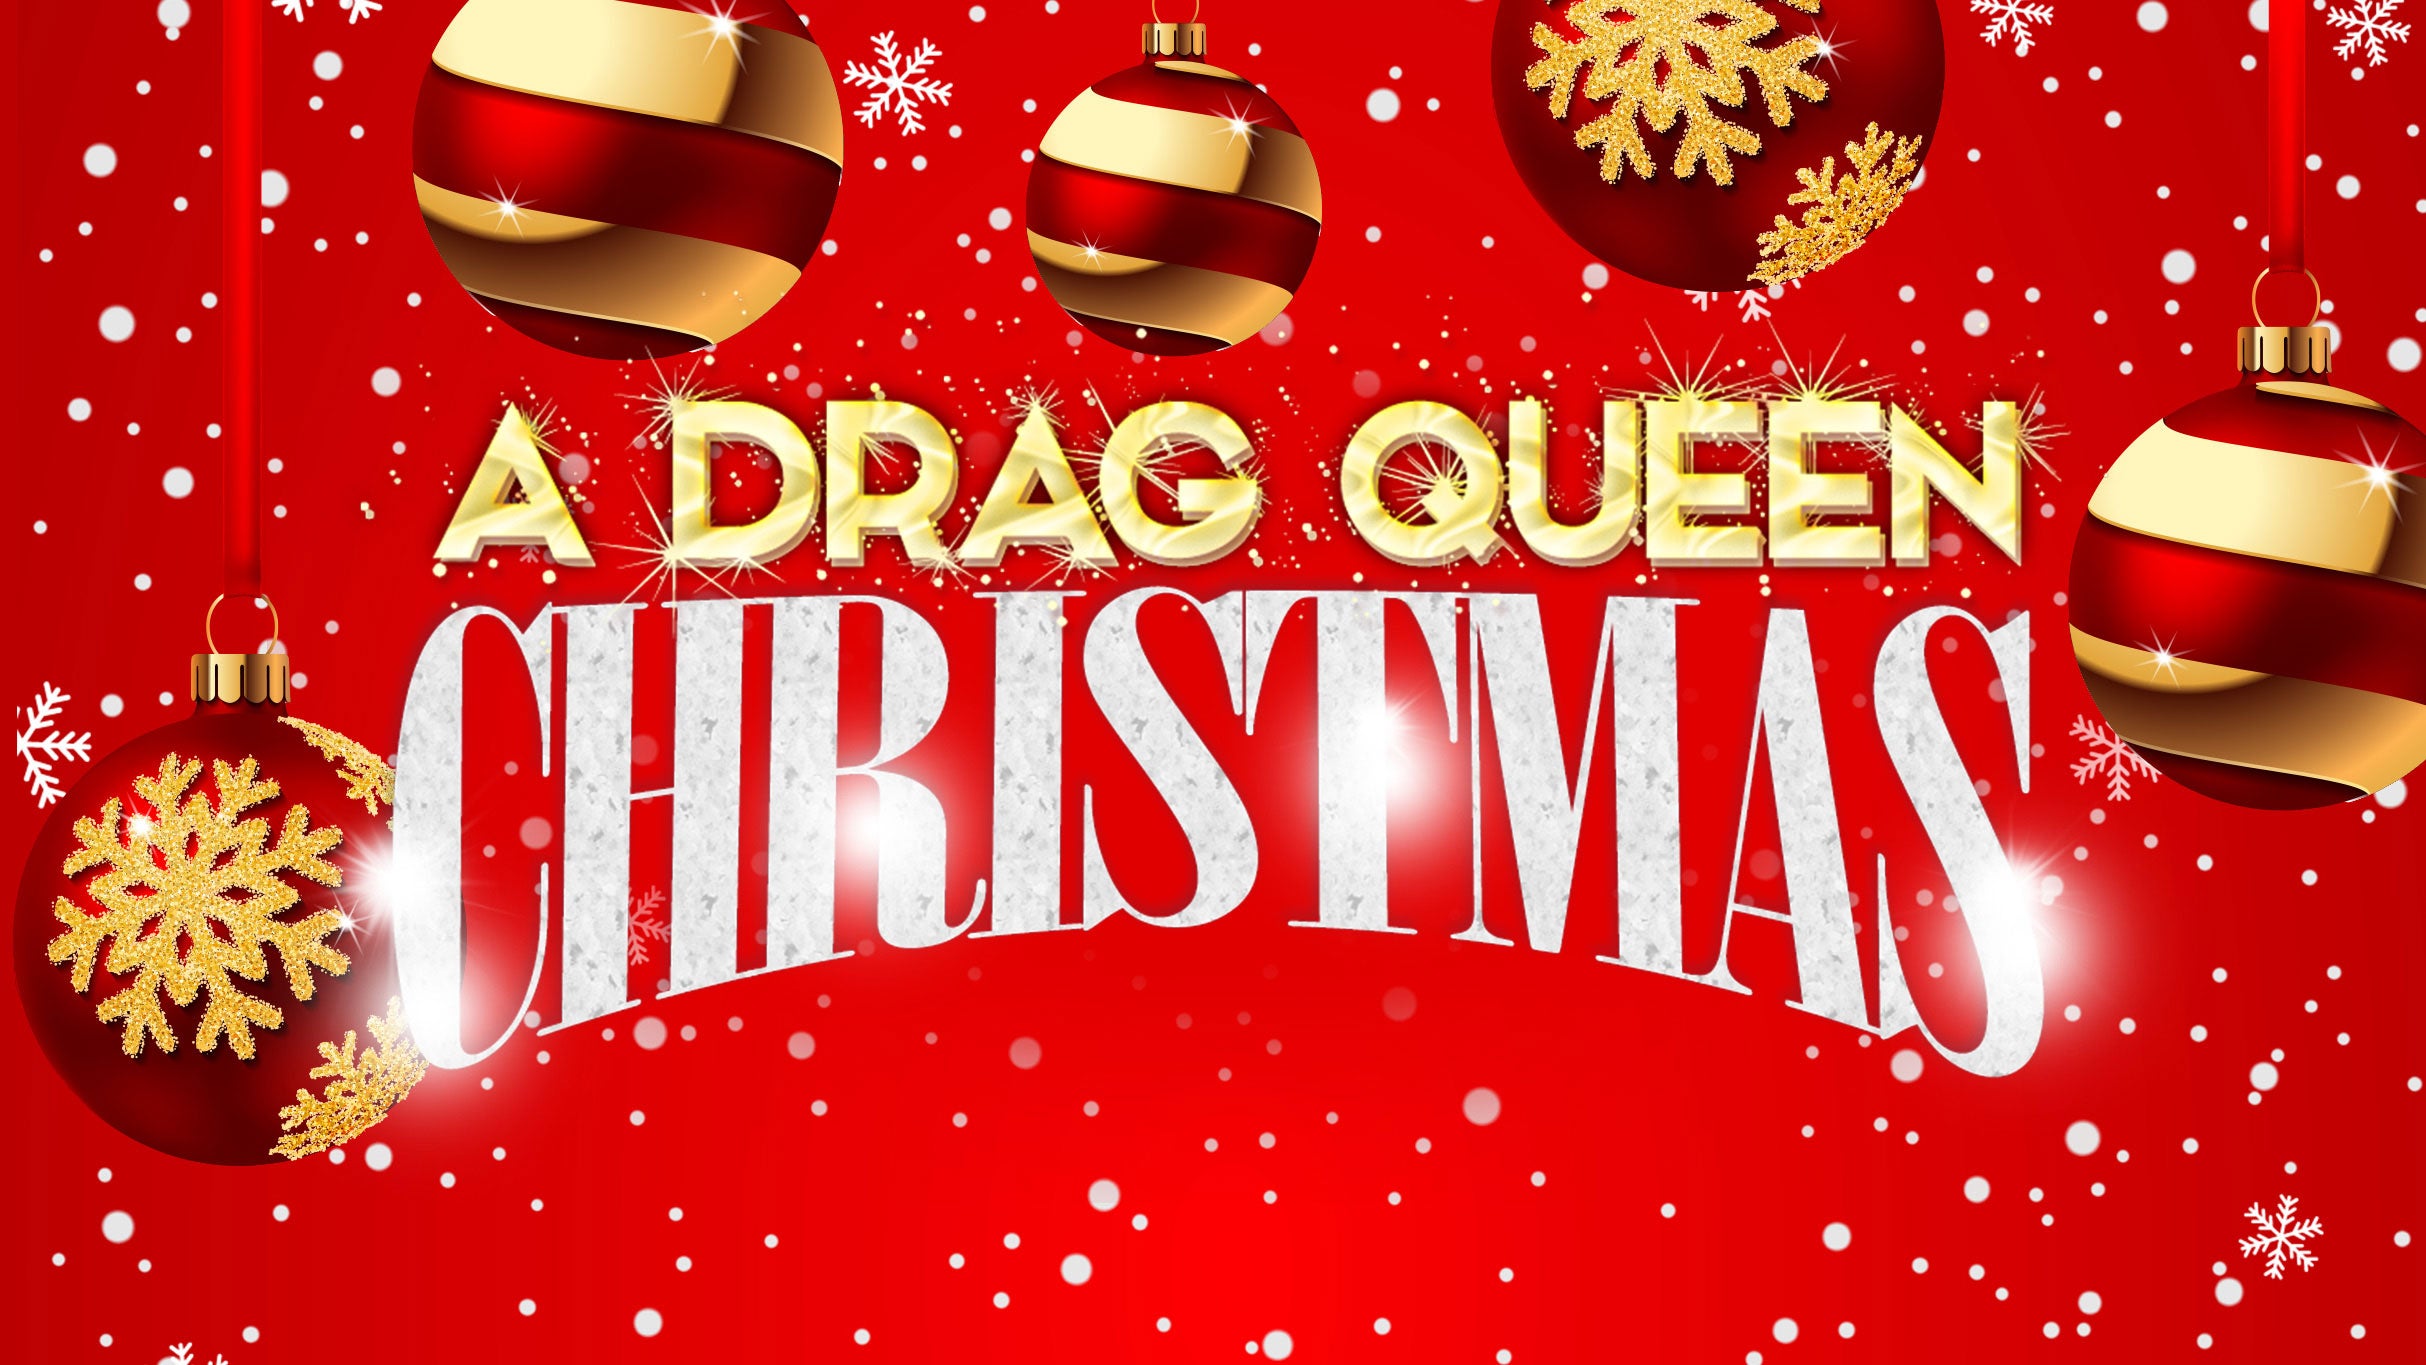 A Drag Queen Christmas (18+) free presale password